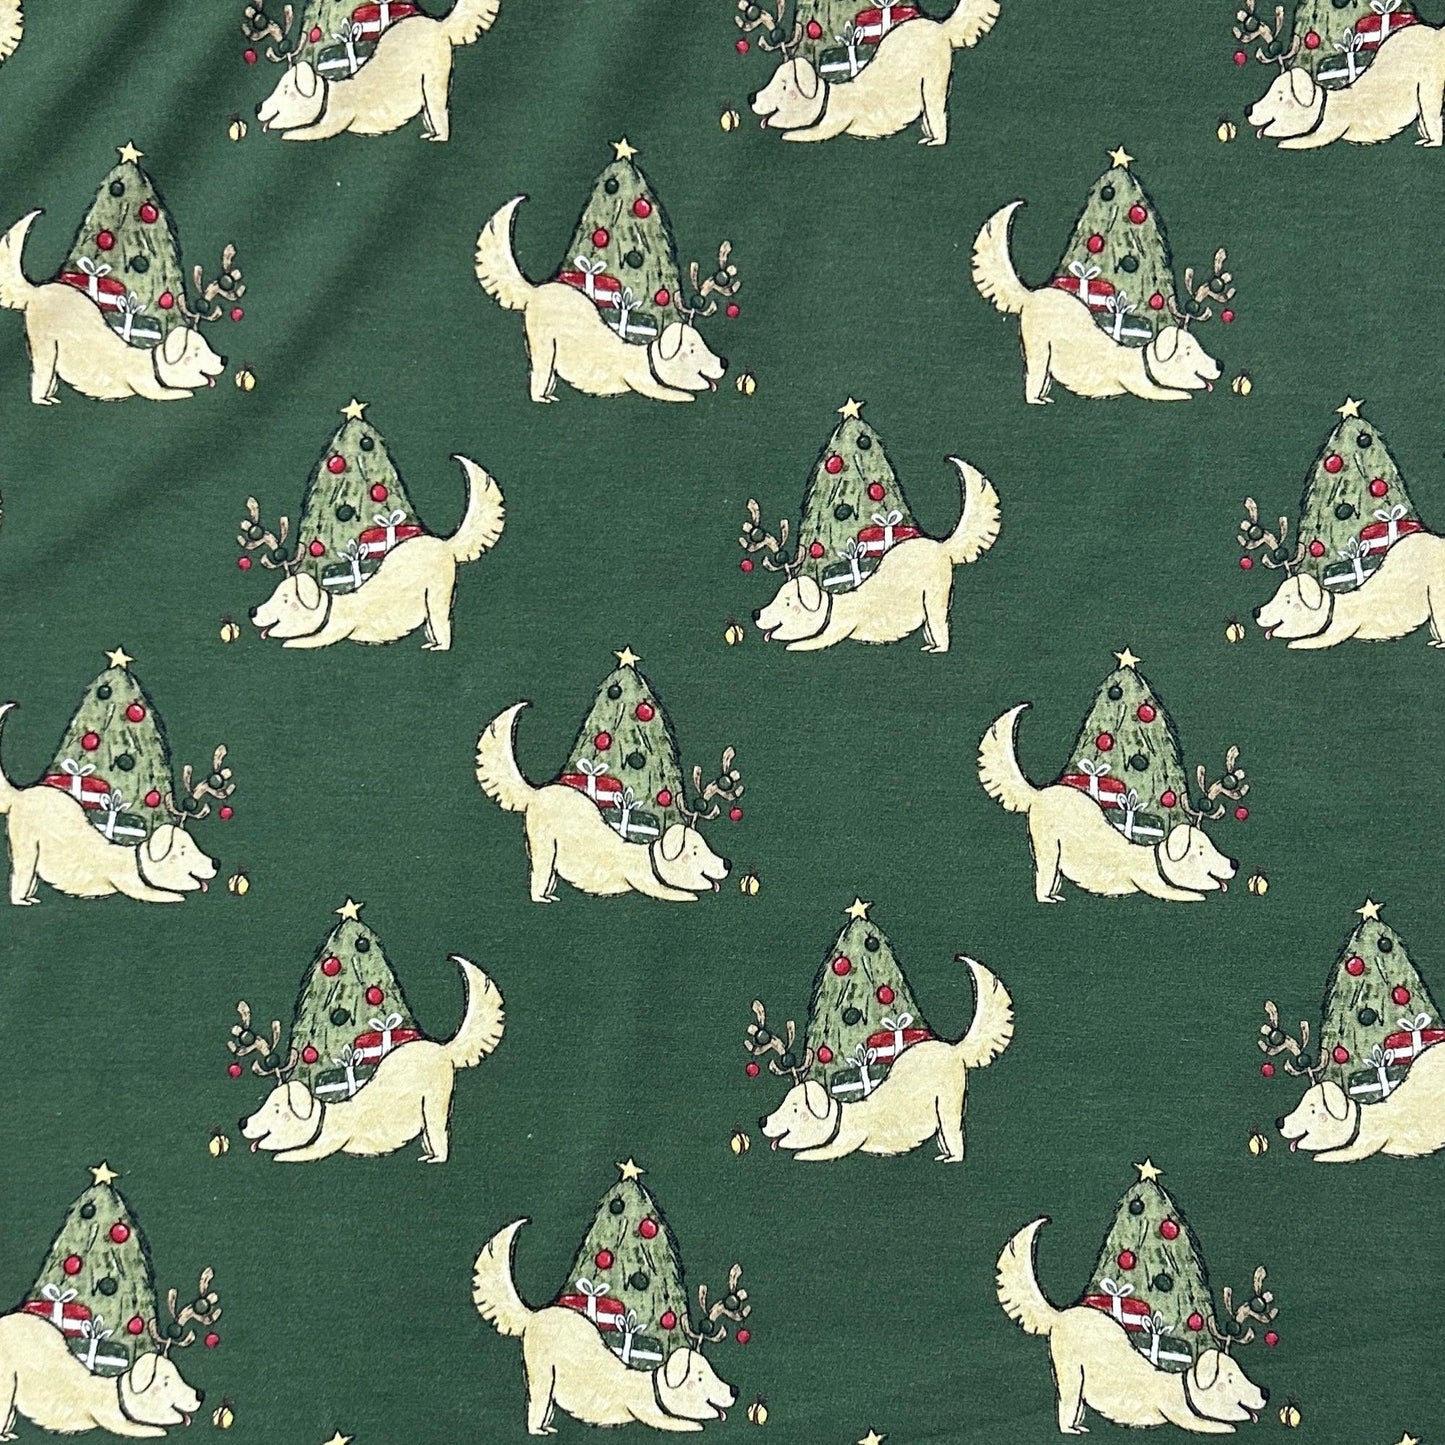 Golden Retriever Christmas on Green Bamboo/Spandex Jersey Fabric - Nature's Fabrics